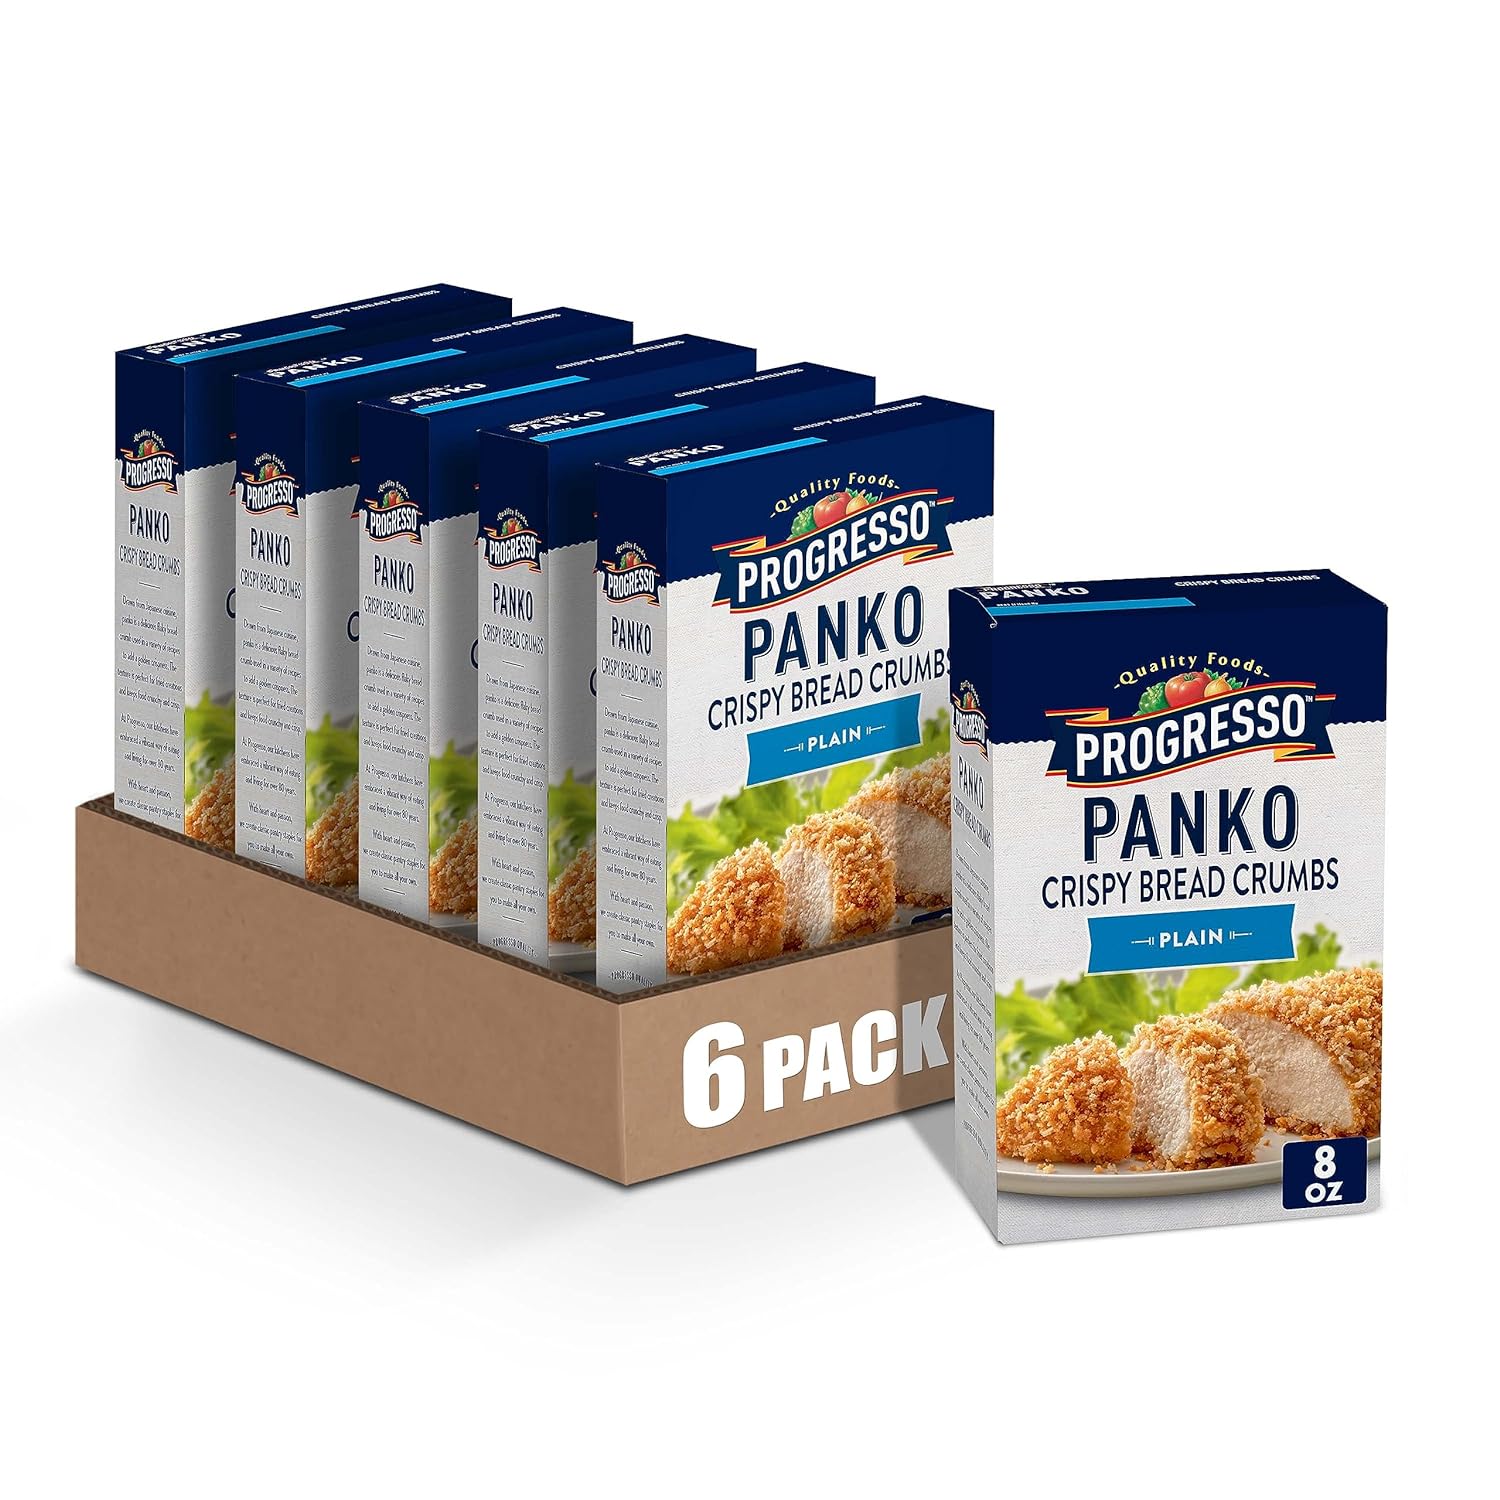 6-Pack 8-Oz Progresso Panko Crispy Bread Crumbs (Plain) $7.40 w/ S&S + Free Shipping w/ Prime or on orders over $35